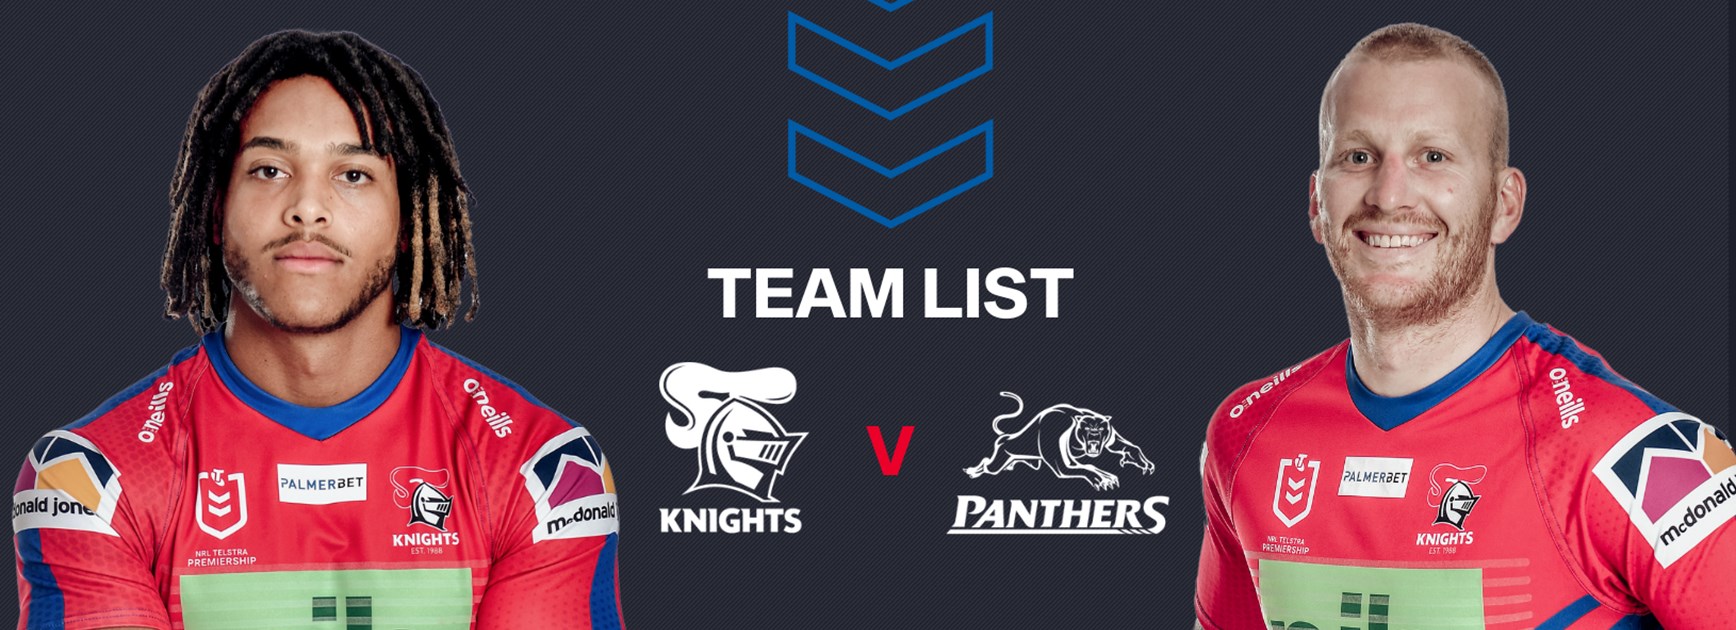 Knights v Panthers Round 14 NRL team list